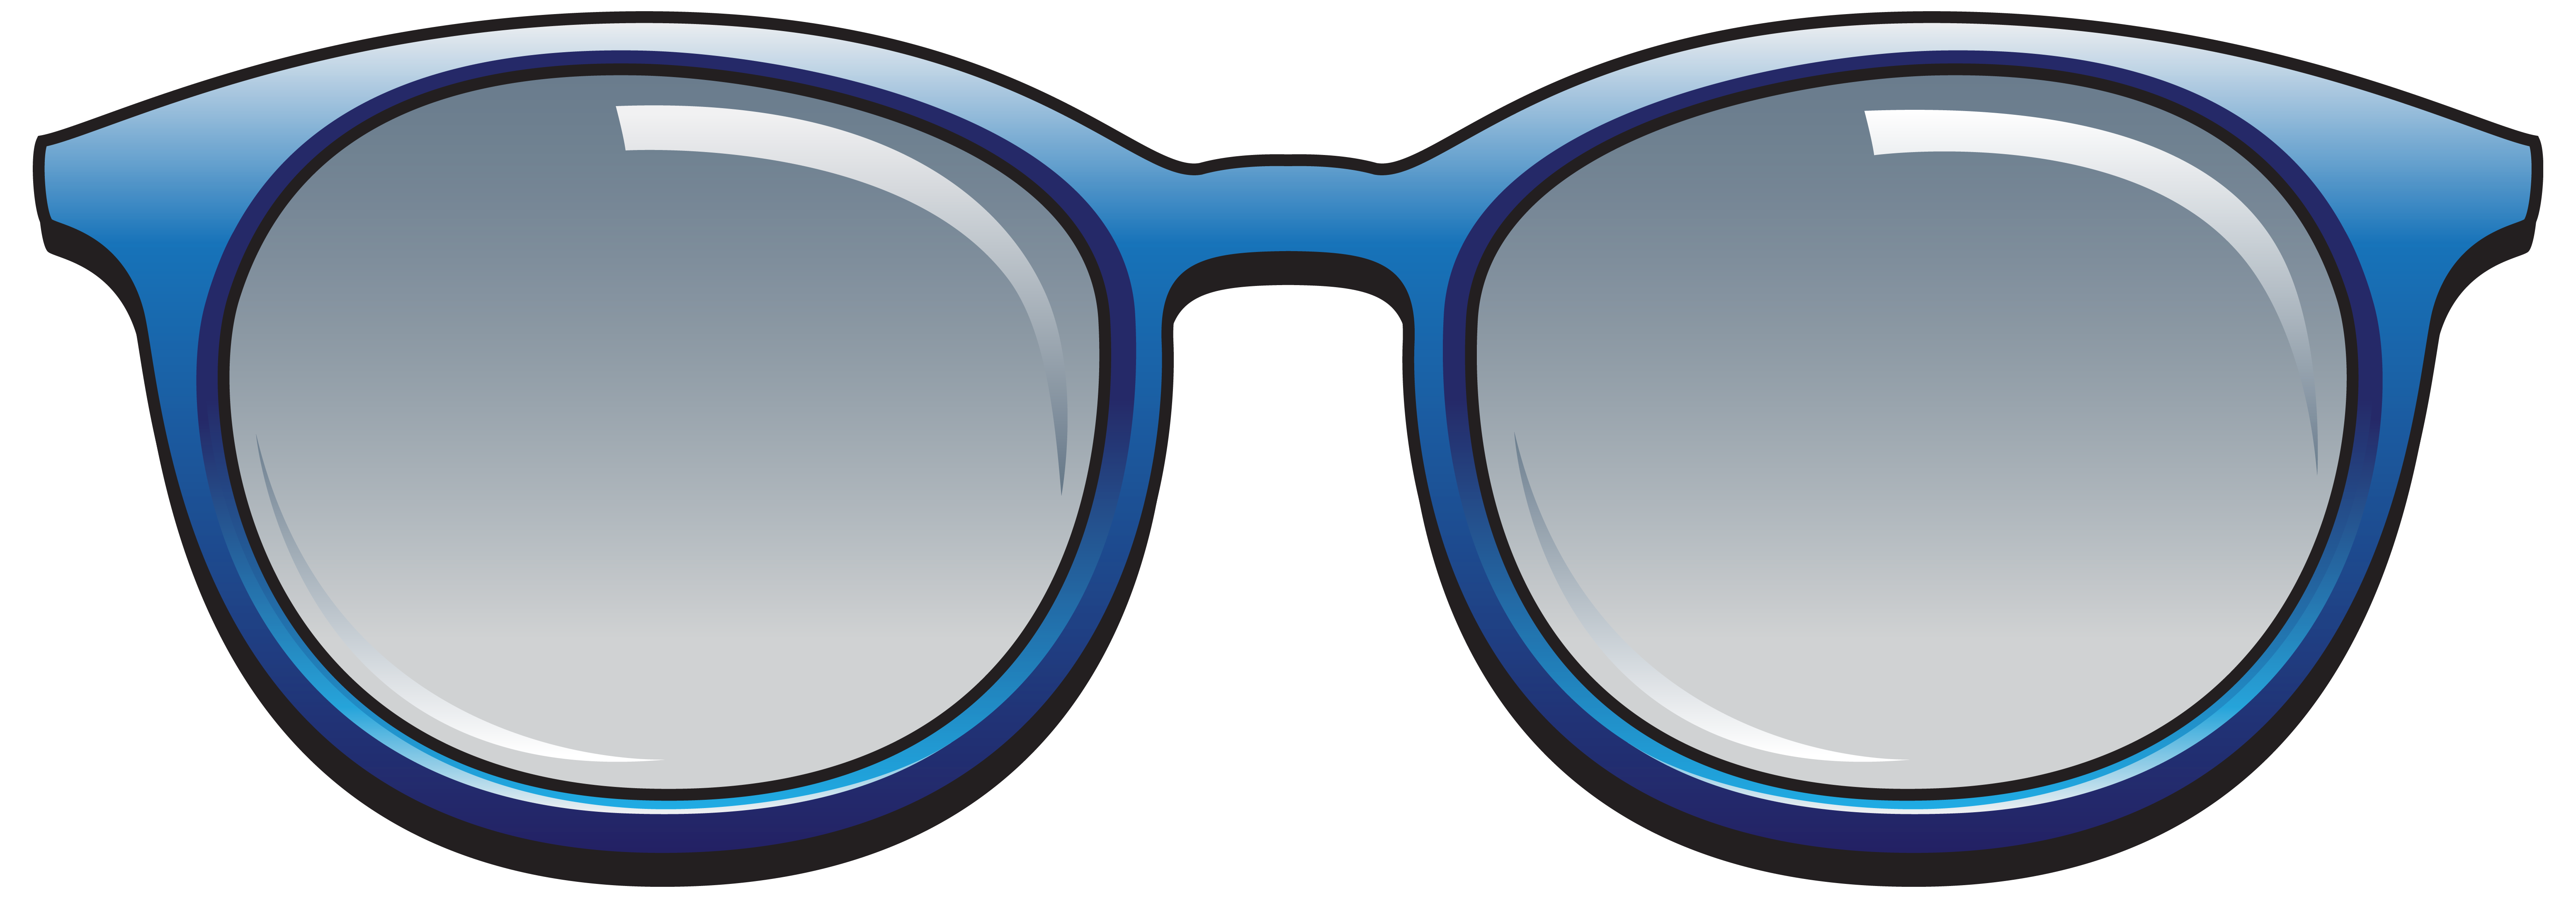 Sunglasses Blue Clip art - glasses png download - 6213*2167 - Free